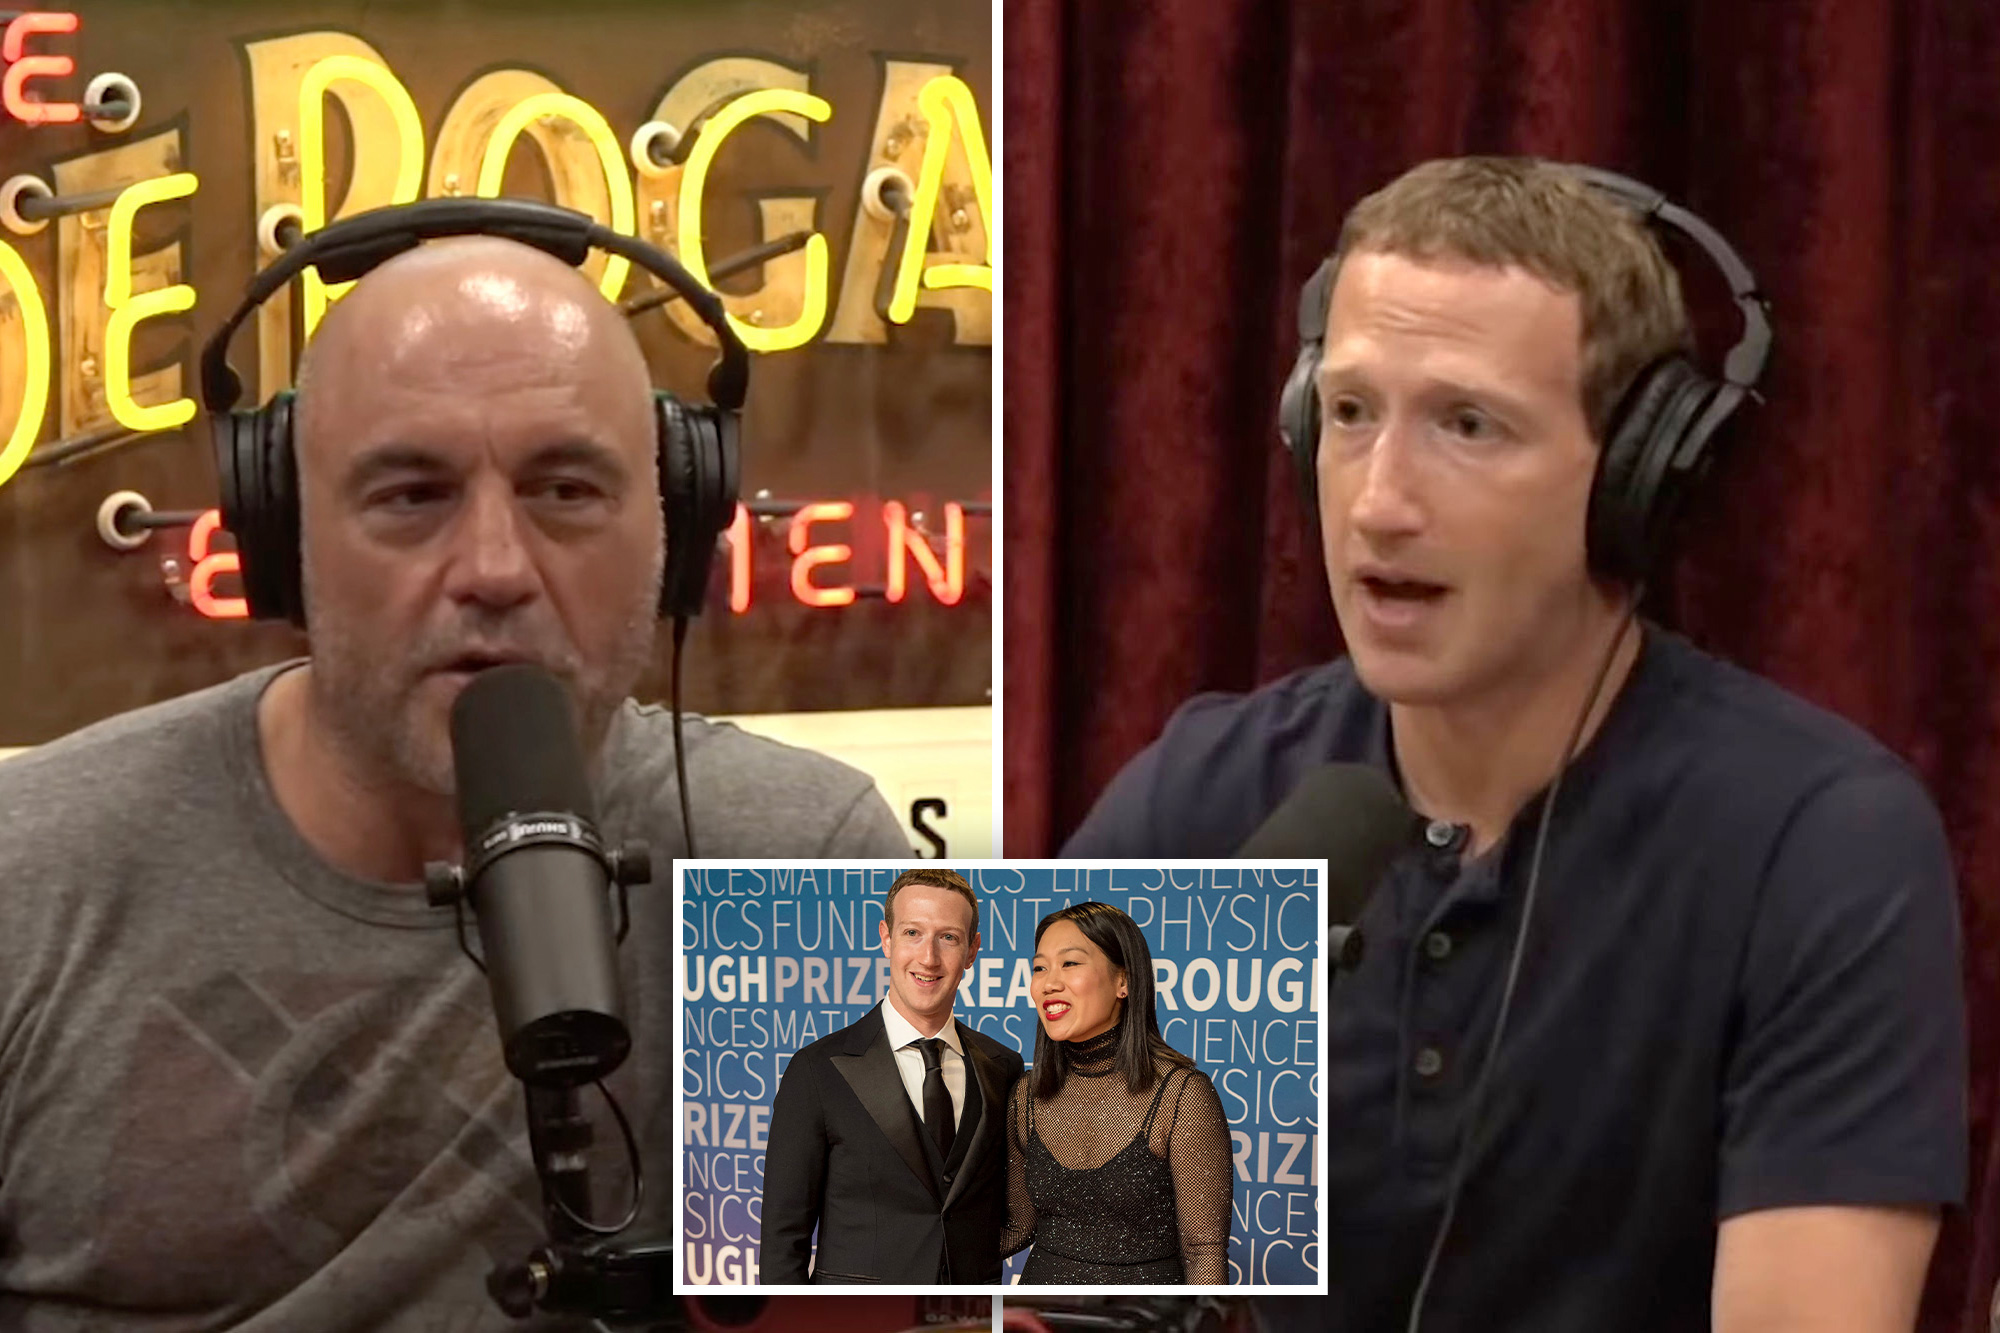 Joe Rogan interviewed Mark Zuckerberg on his "Joe Rogan Experience" podcast on Spotify on Thursday.